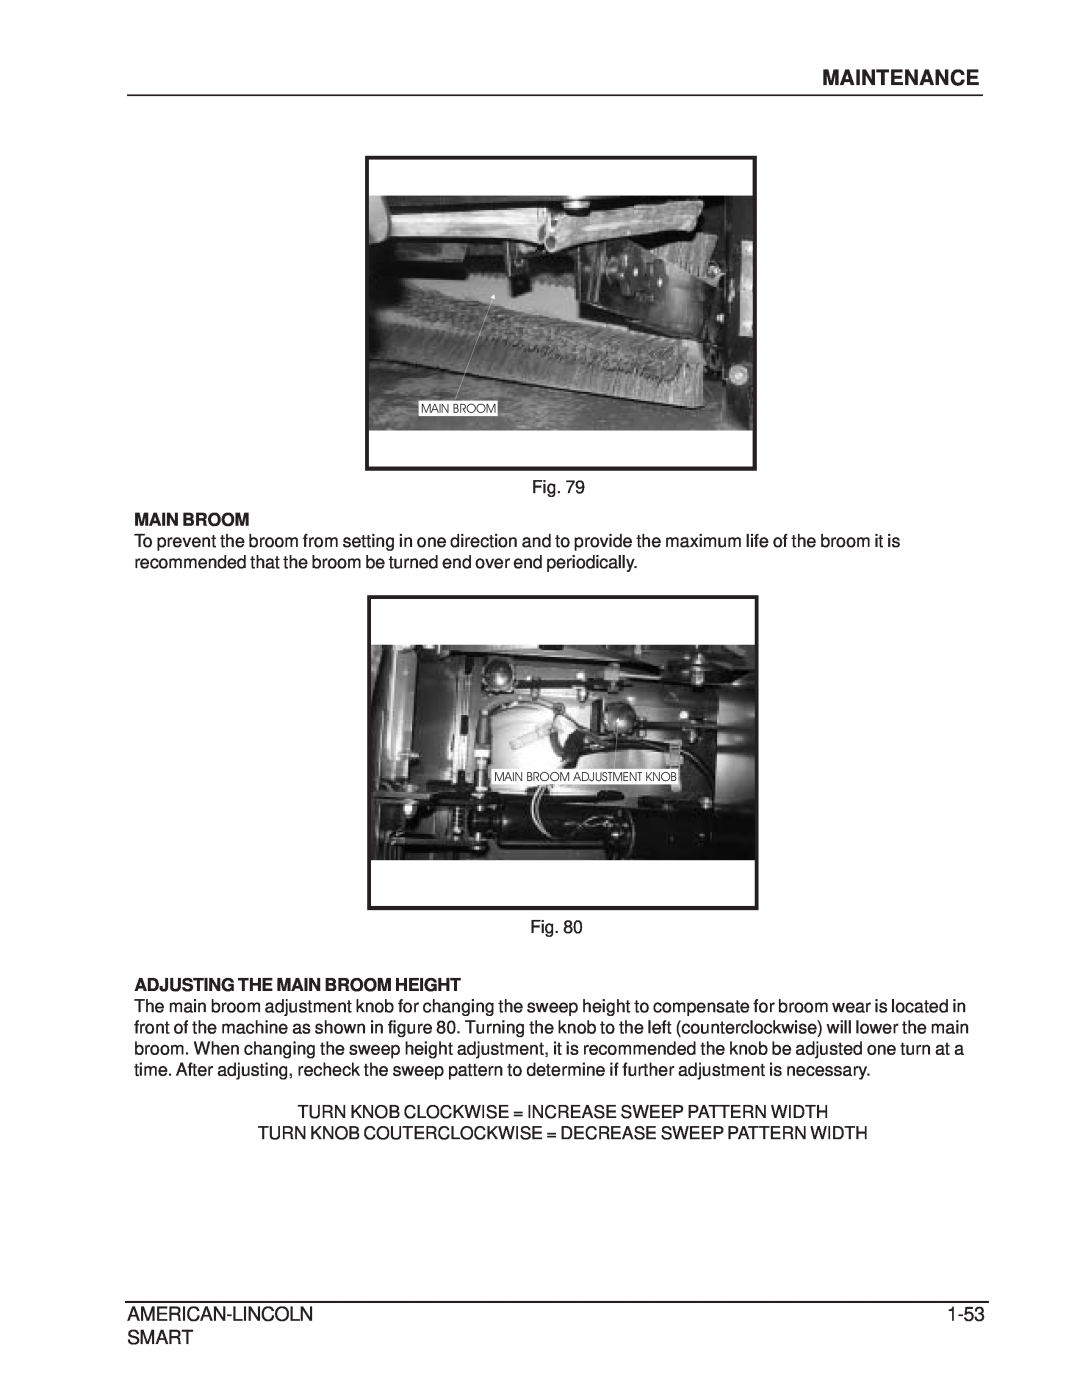 Nilfisk-ALTO 692003 manual Maintenance, American-Lincoln, 1-53, Smart, Adjusting The Main Broom Height 